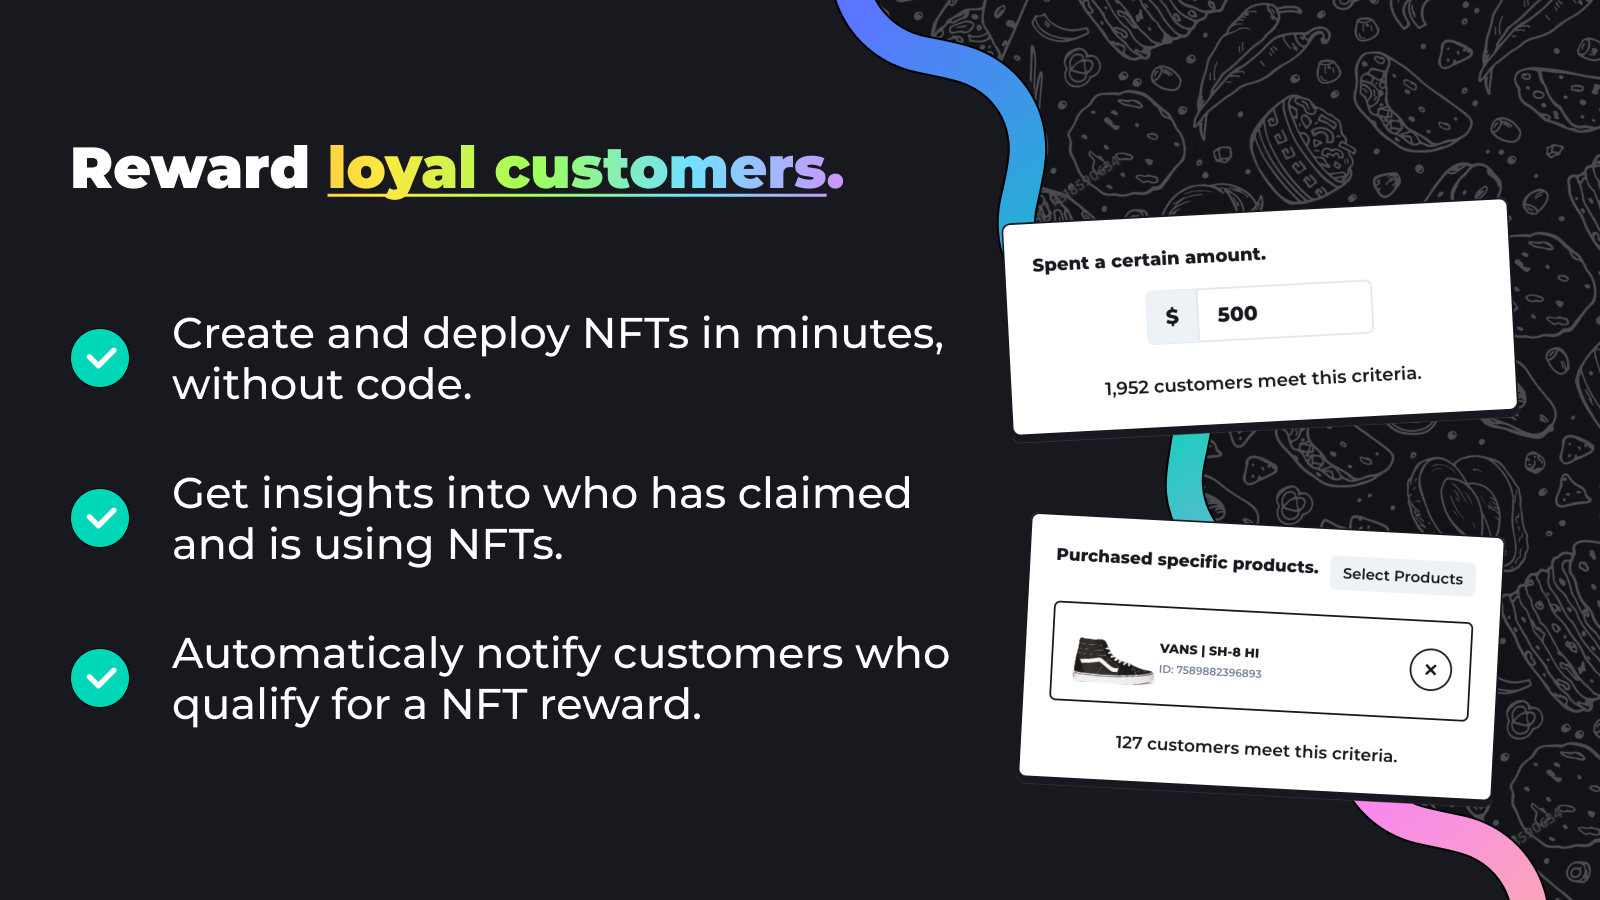 Reward loyal customers